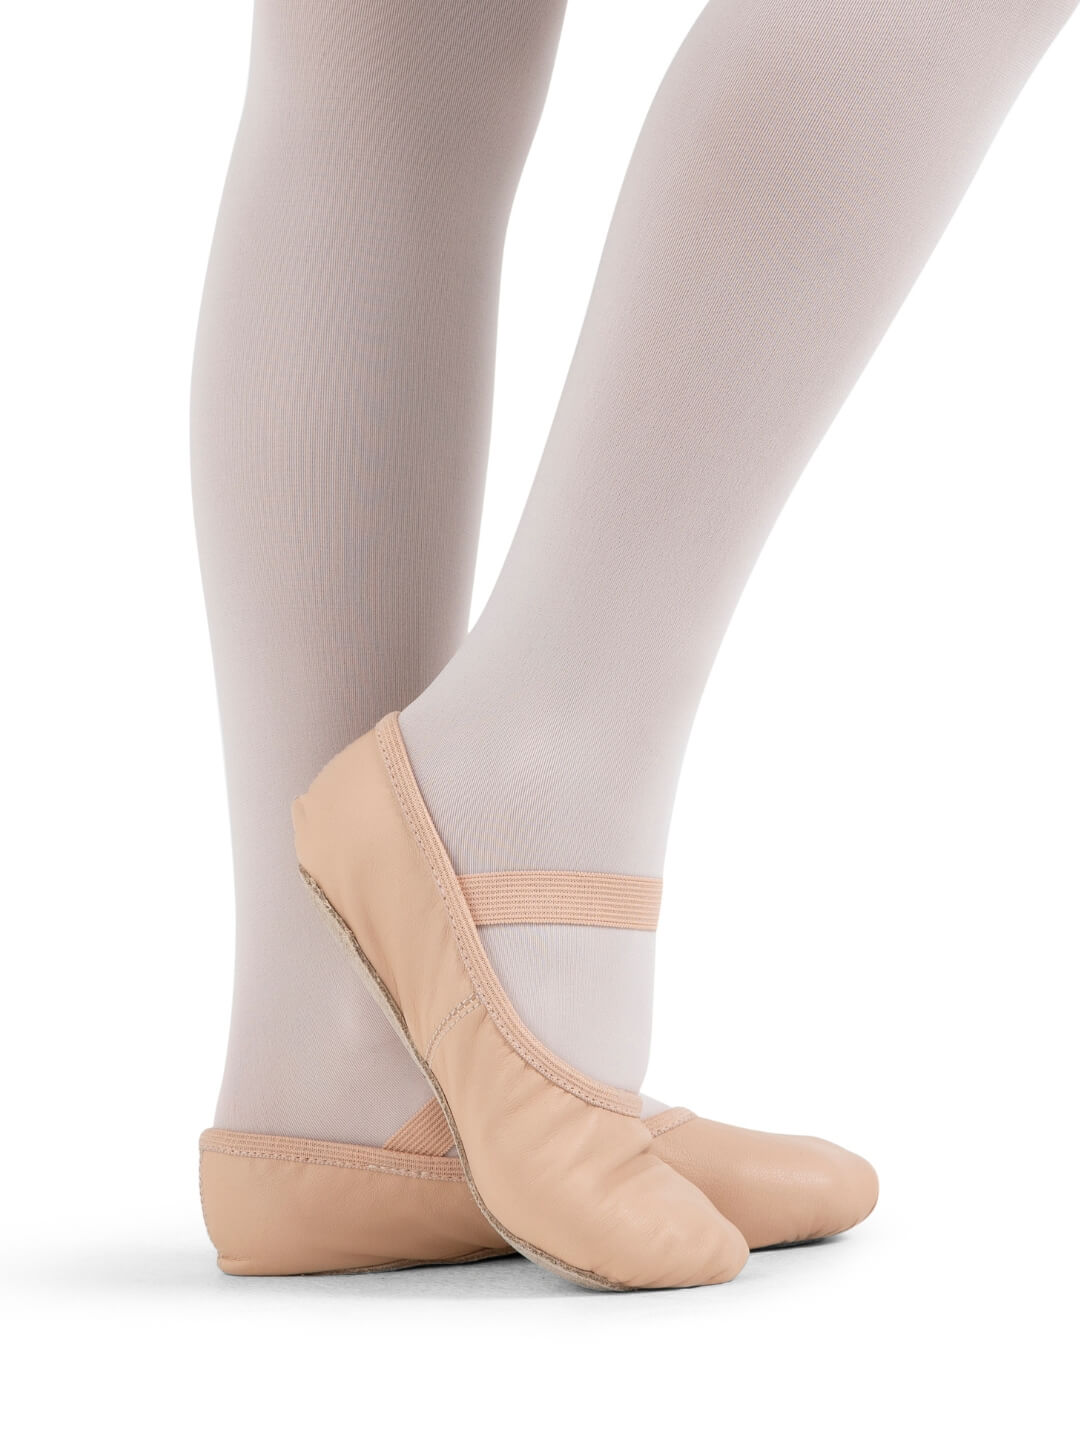 Luna Ballet Shoe - Child Ballet Pink